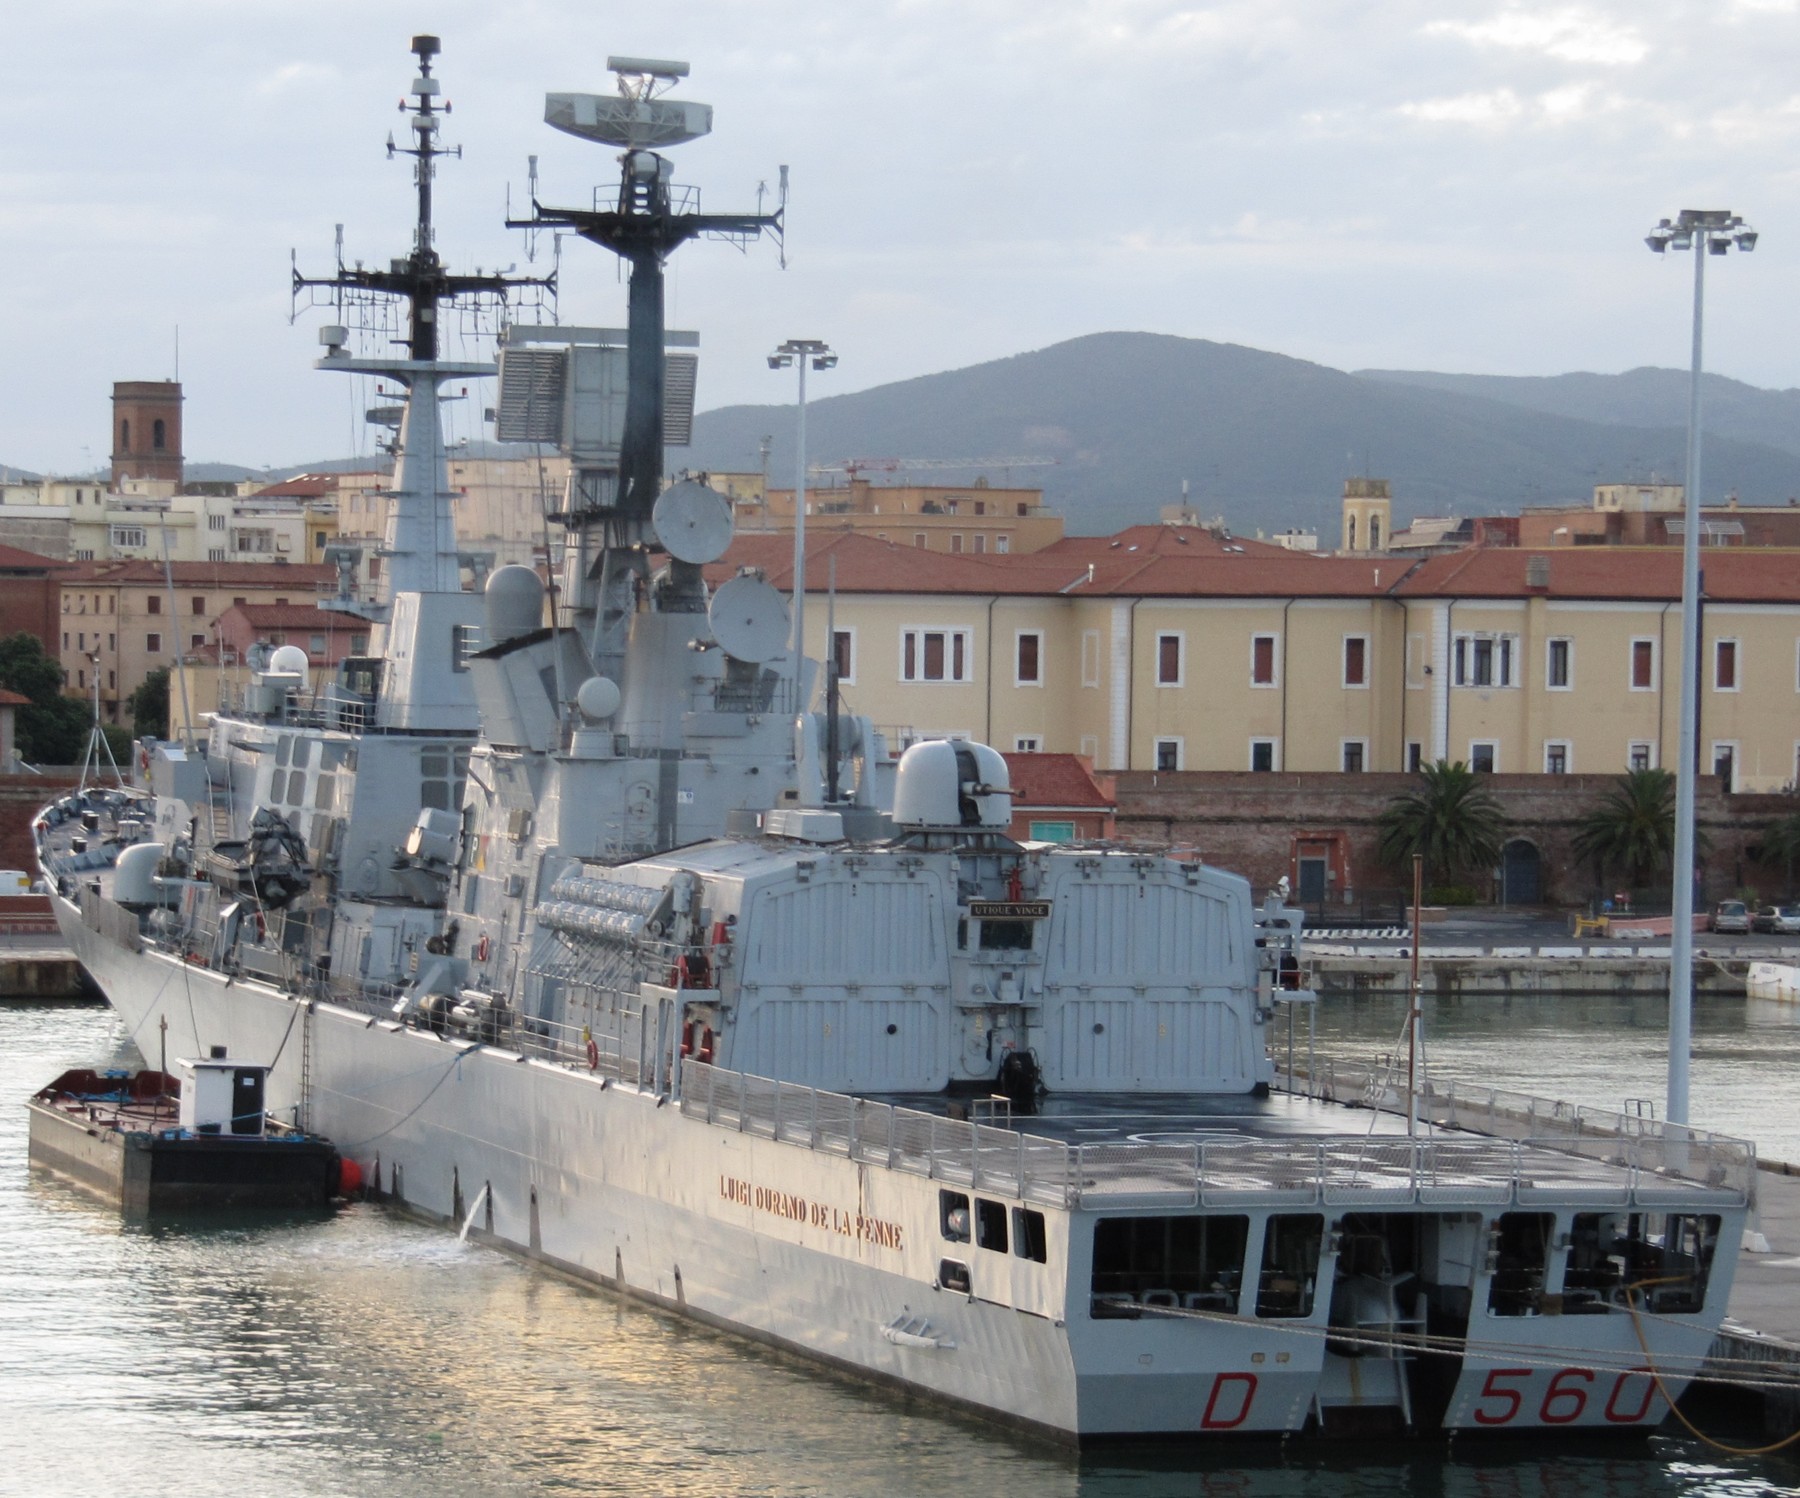 d-560 luigi durand de la penne its nave guided missile destroyer ddg italian navy marina militare 64